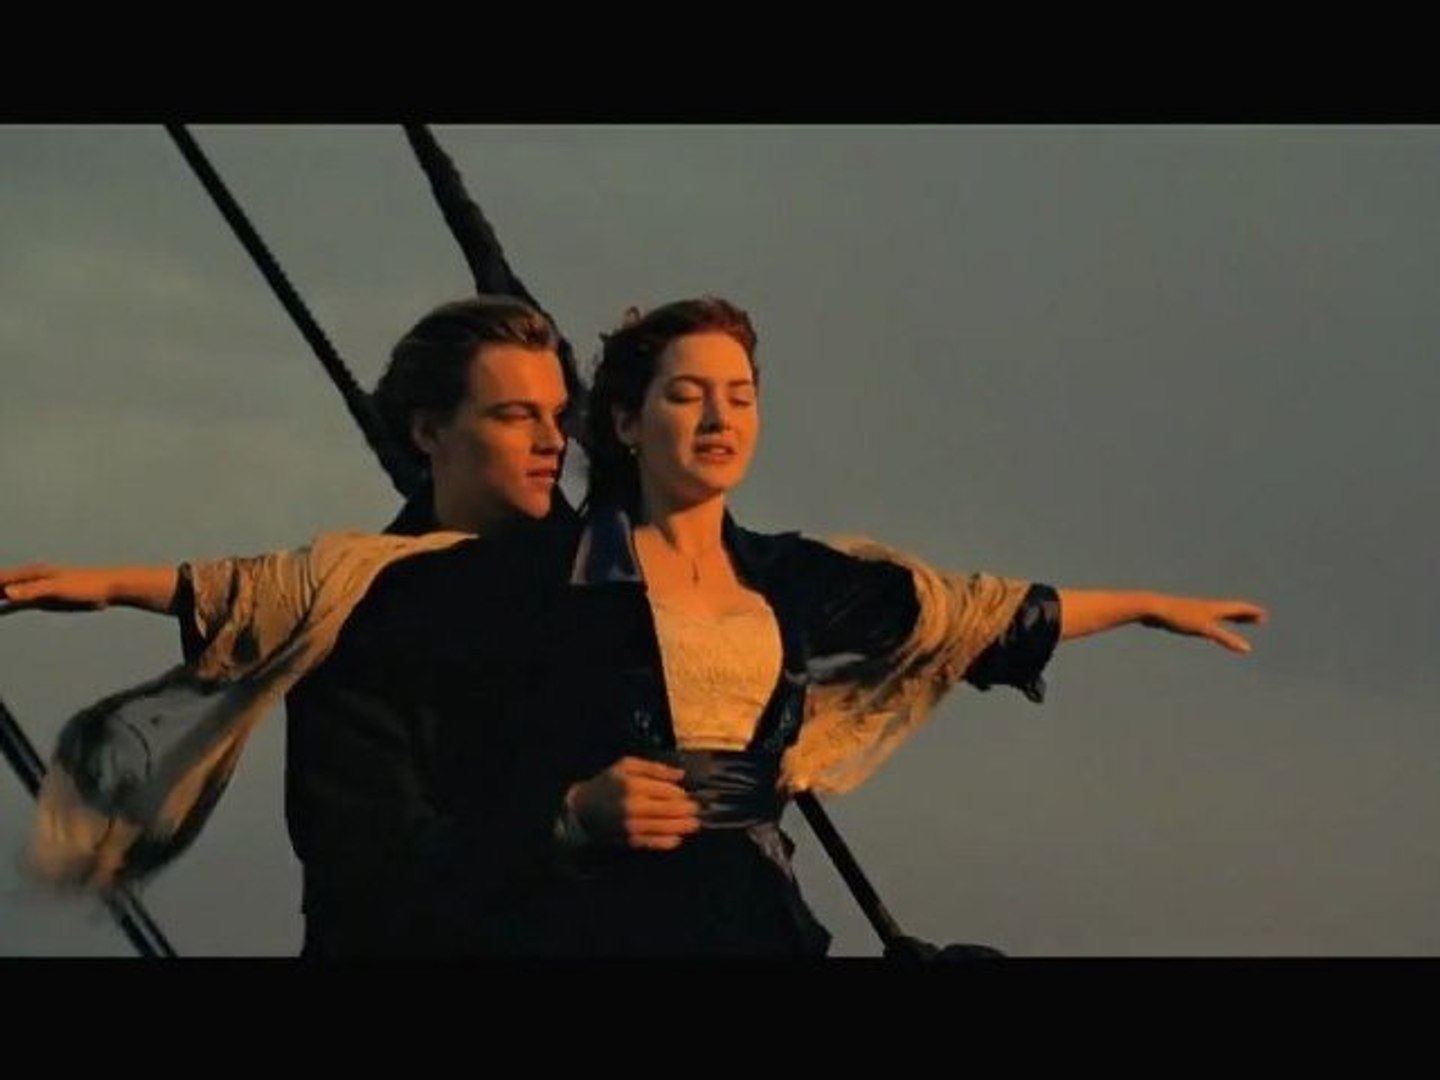 Titanic 3D - Trailer en español HD - Vídeo Dailymotion